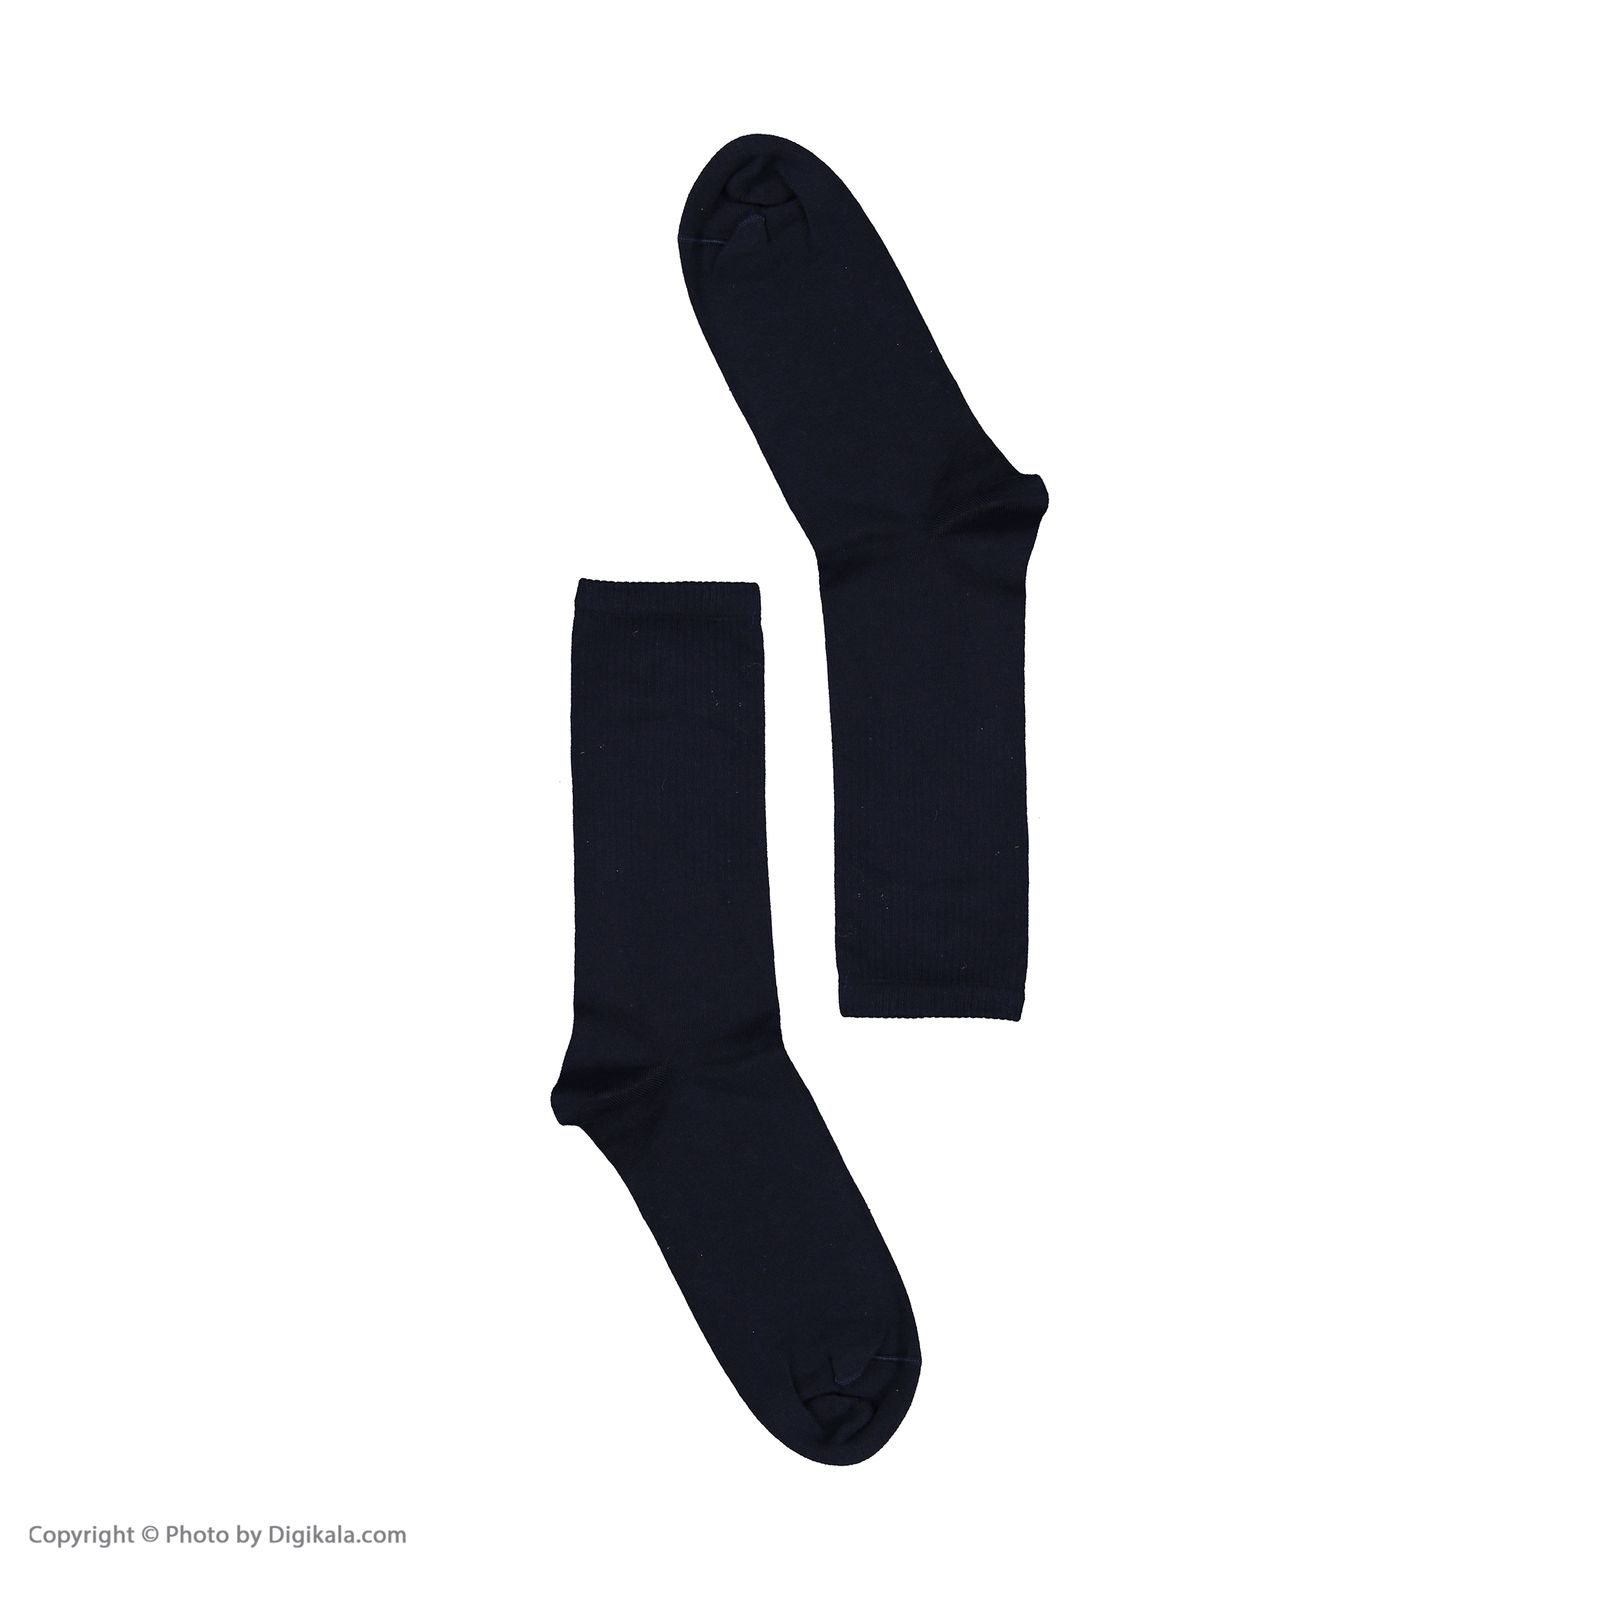 جوراب مردانه سیکس زیرو ناین مدل 1075-59 بسته 3 عددی -  - 3